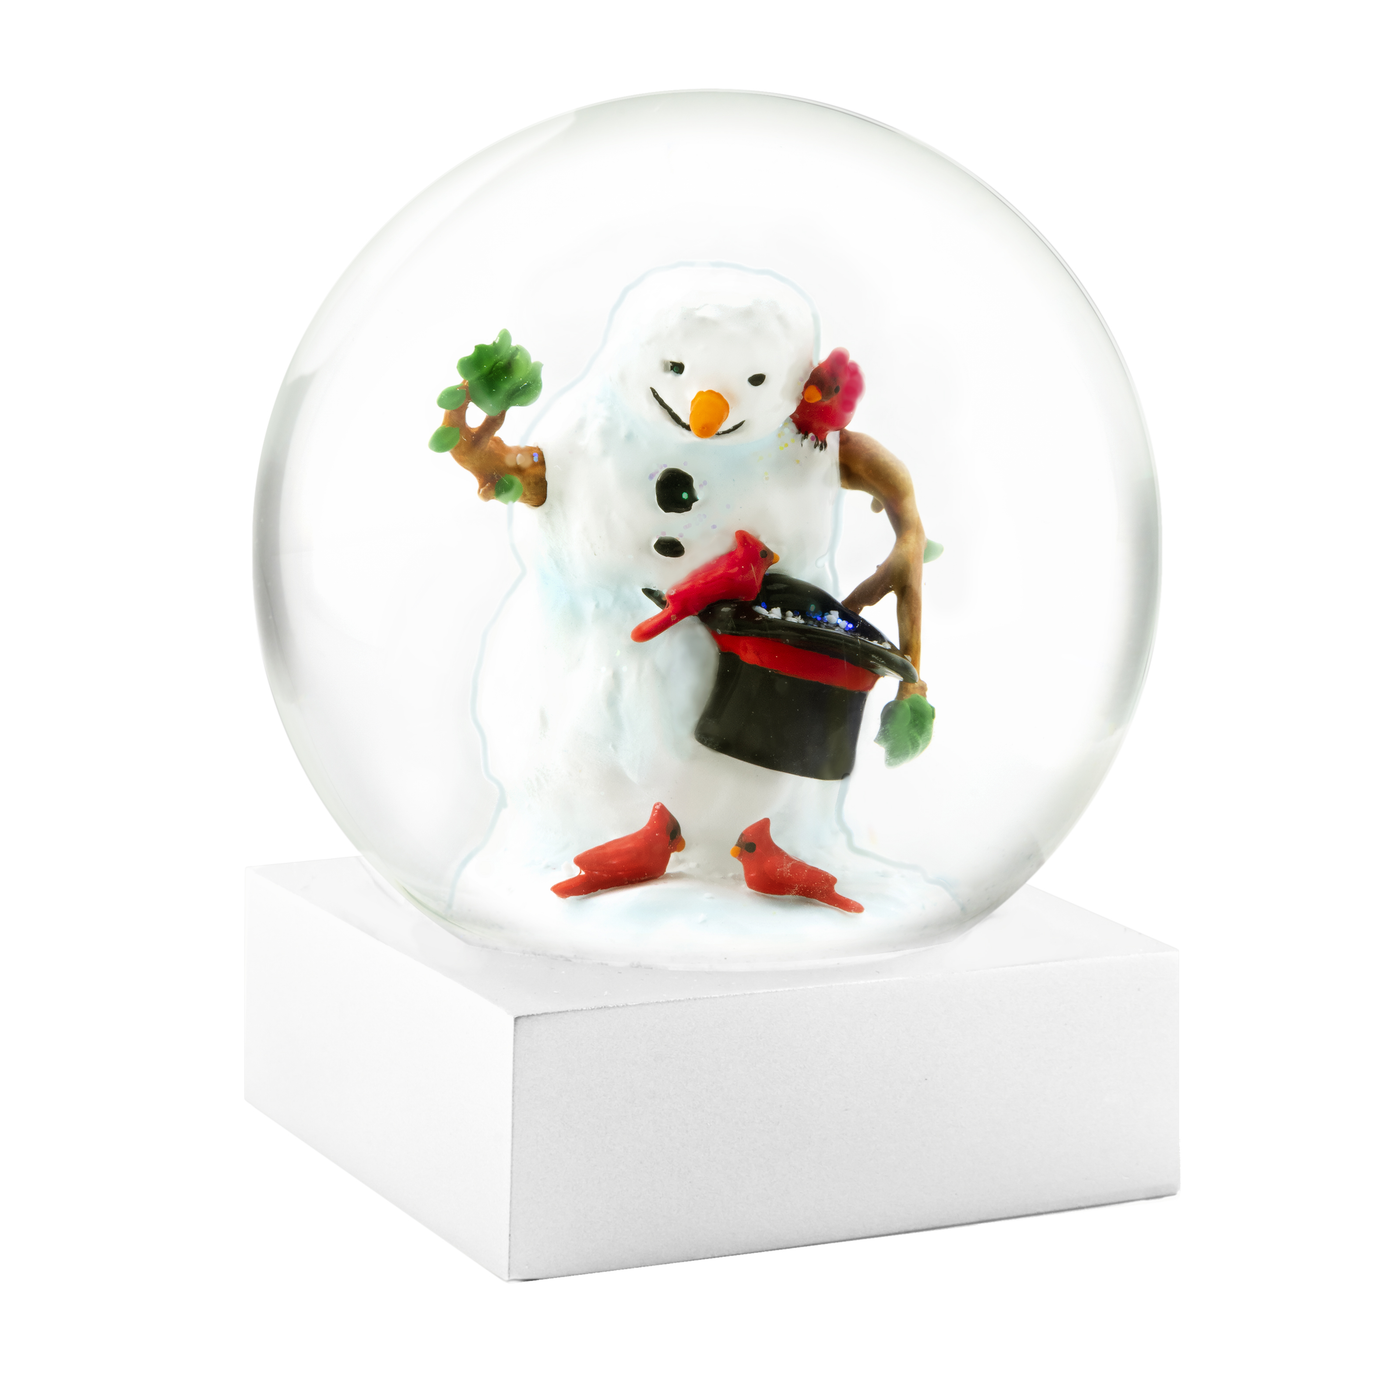 CoolSnowGlobes Snowman Snow Globe